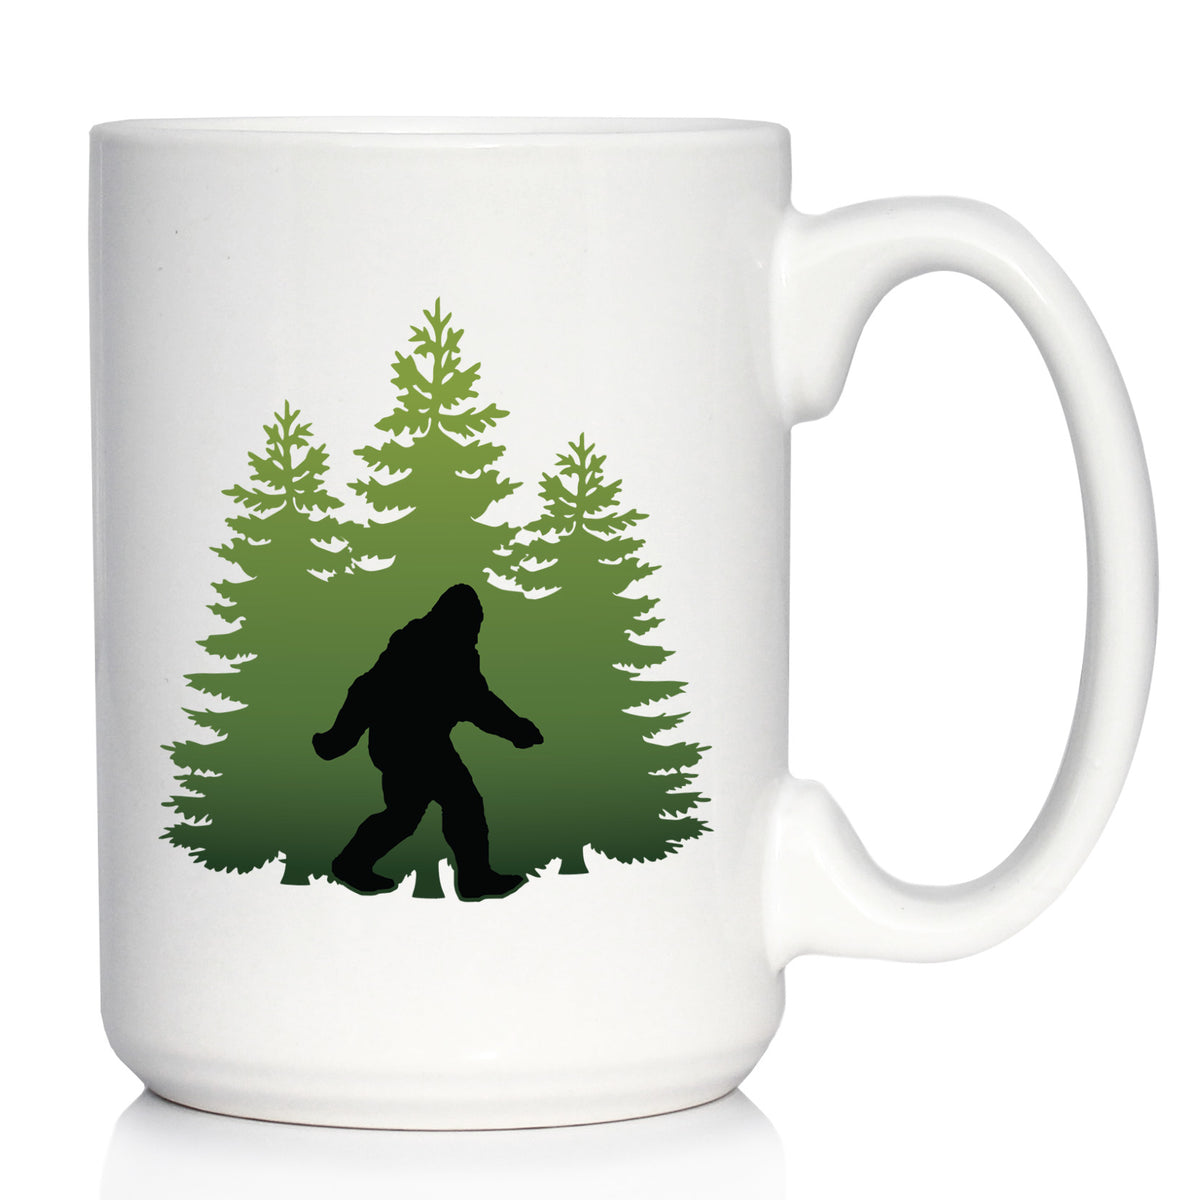 Bigfoot Coffee Mug - Funny Bigfoot Gifts for Sasquatch Enthusiasts